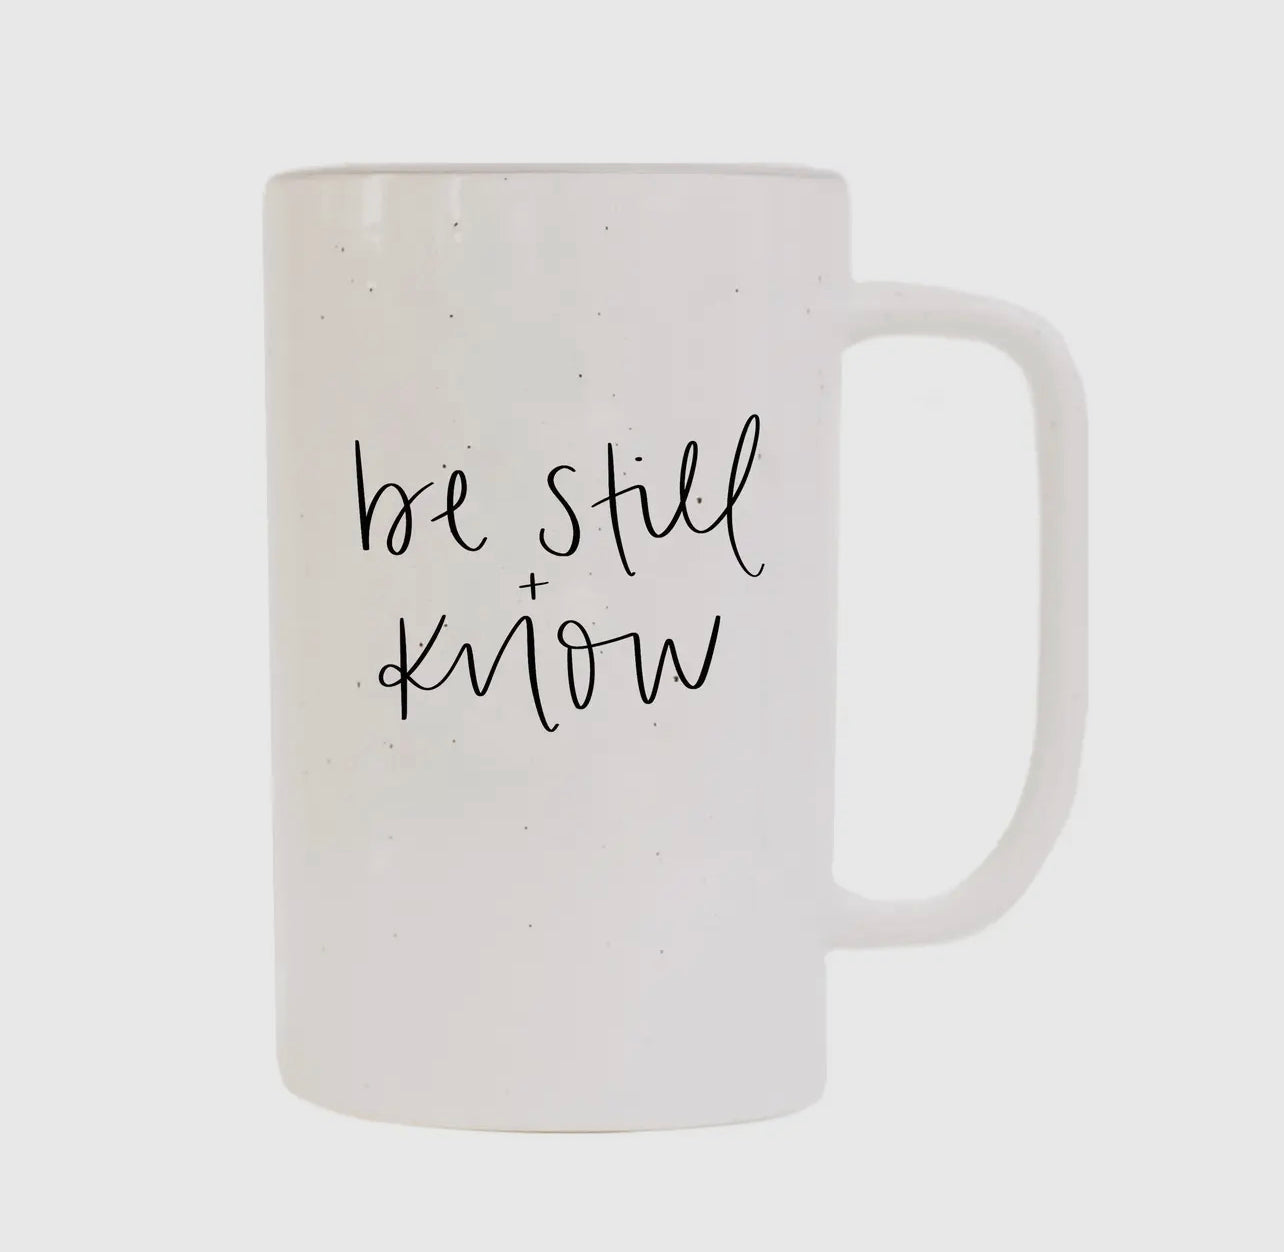 Be Still + Know Coffee Mug